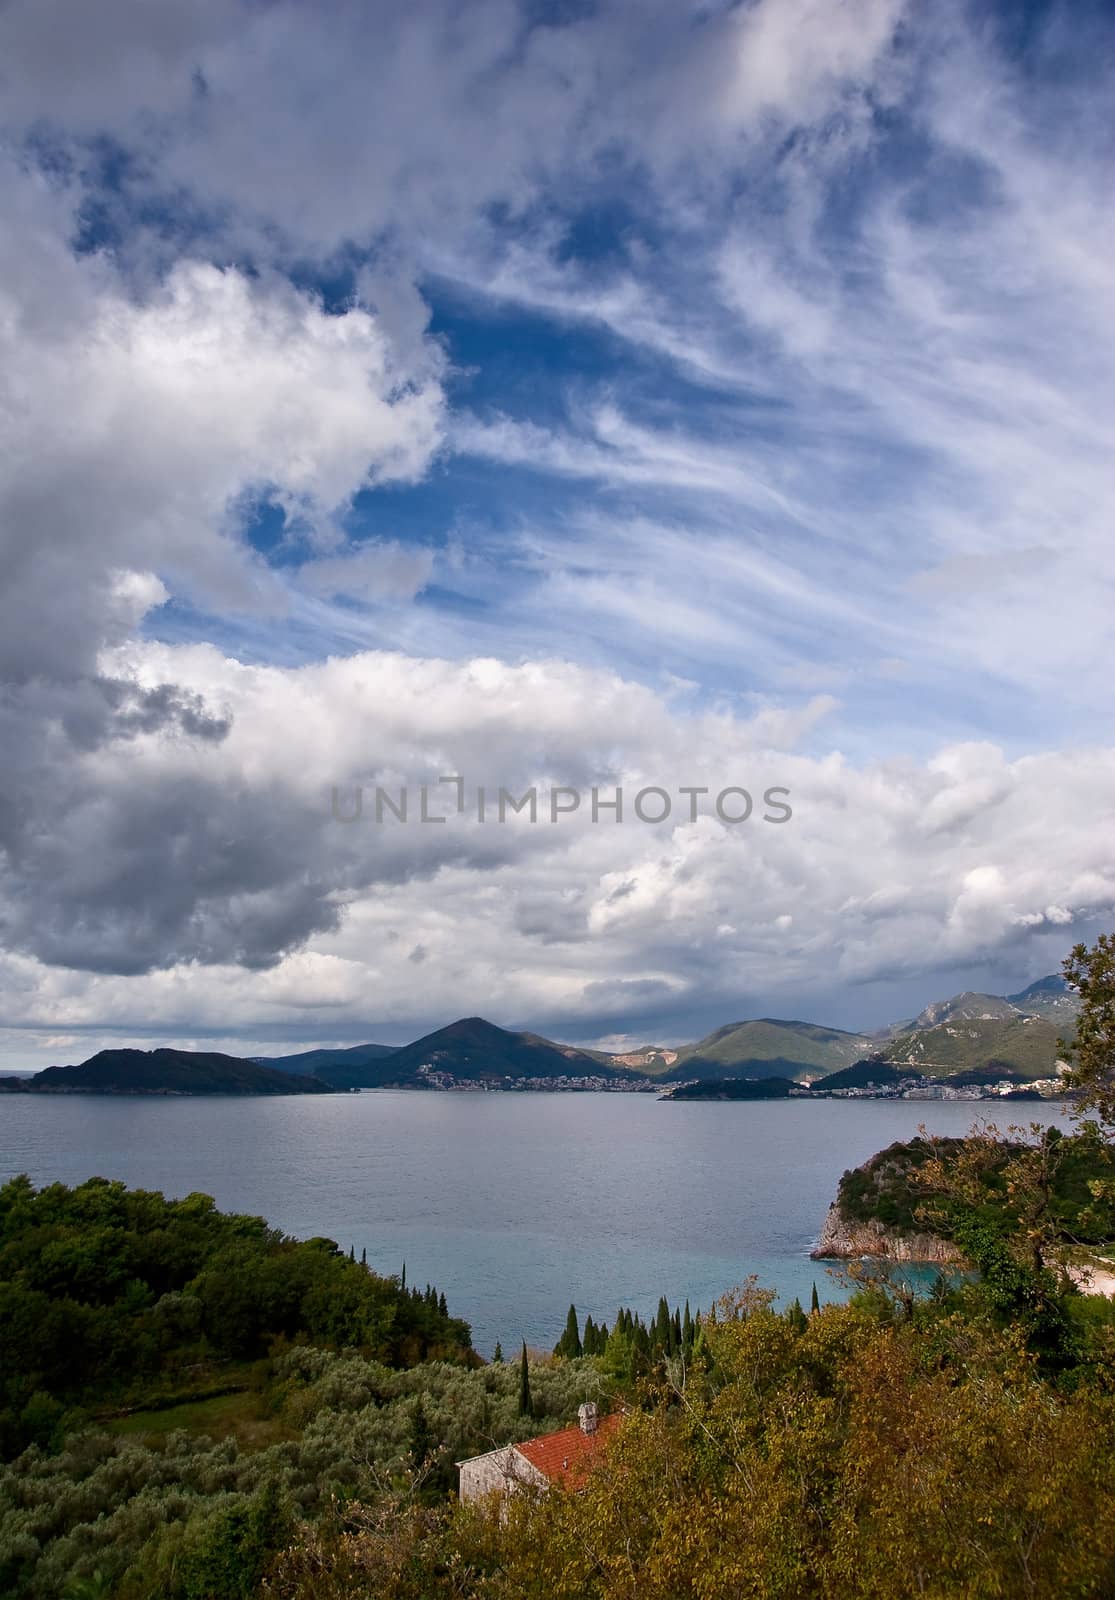 autemn on the mediterranean coast with dramatic sky